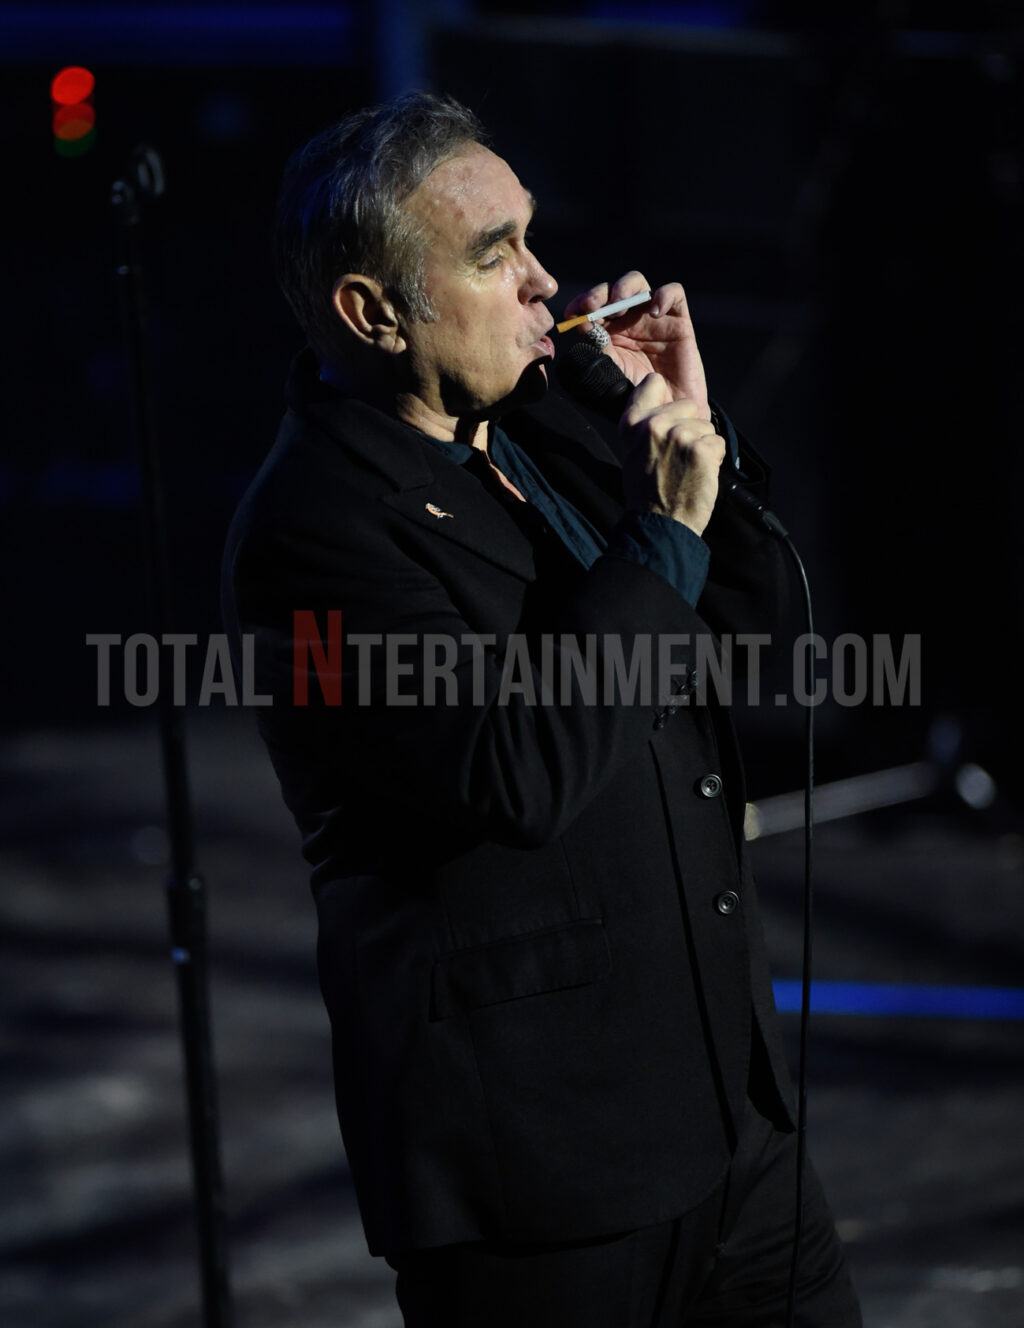 Morrissey, Manchester, TotalNtertainment, Stephen Farrell, Music, Live Event